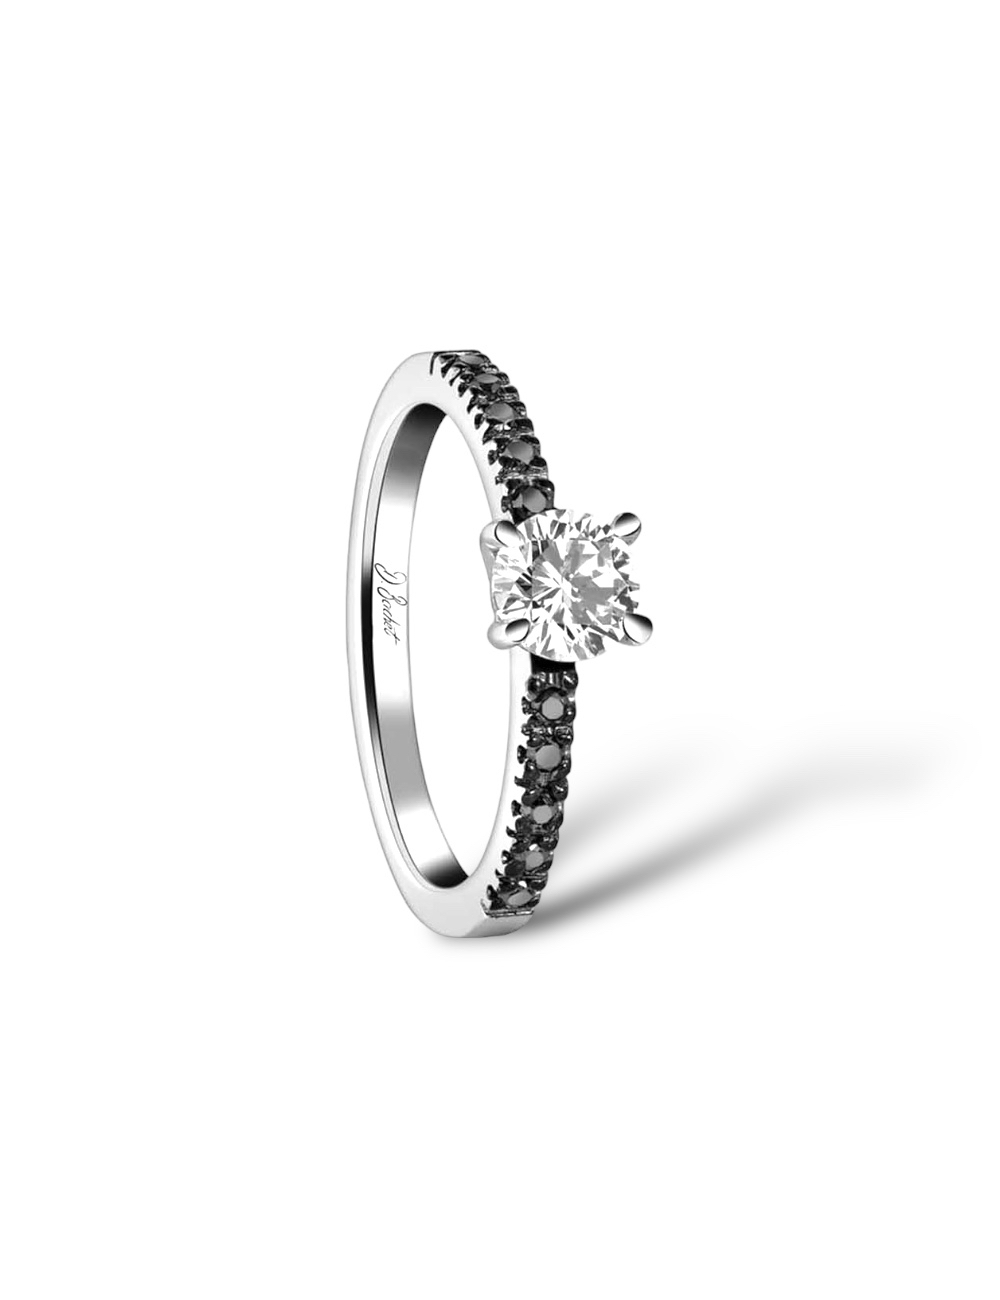 Engagement ring: platinum, central white diamond, black diamond pavé, prong setting.